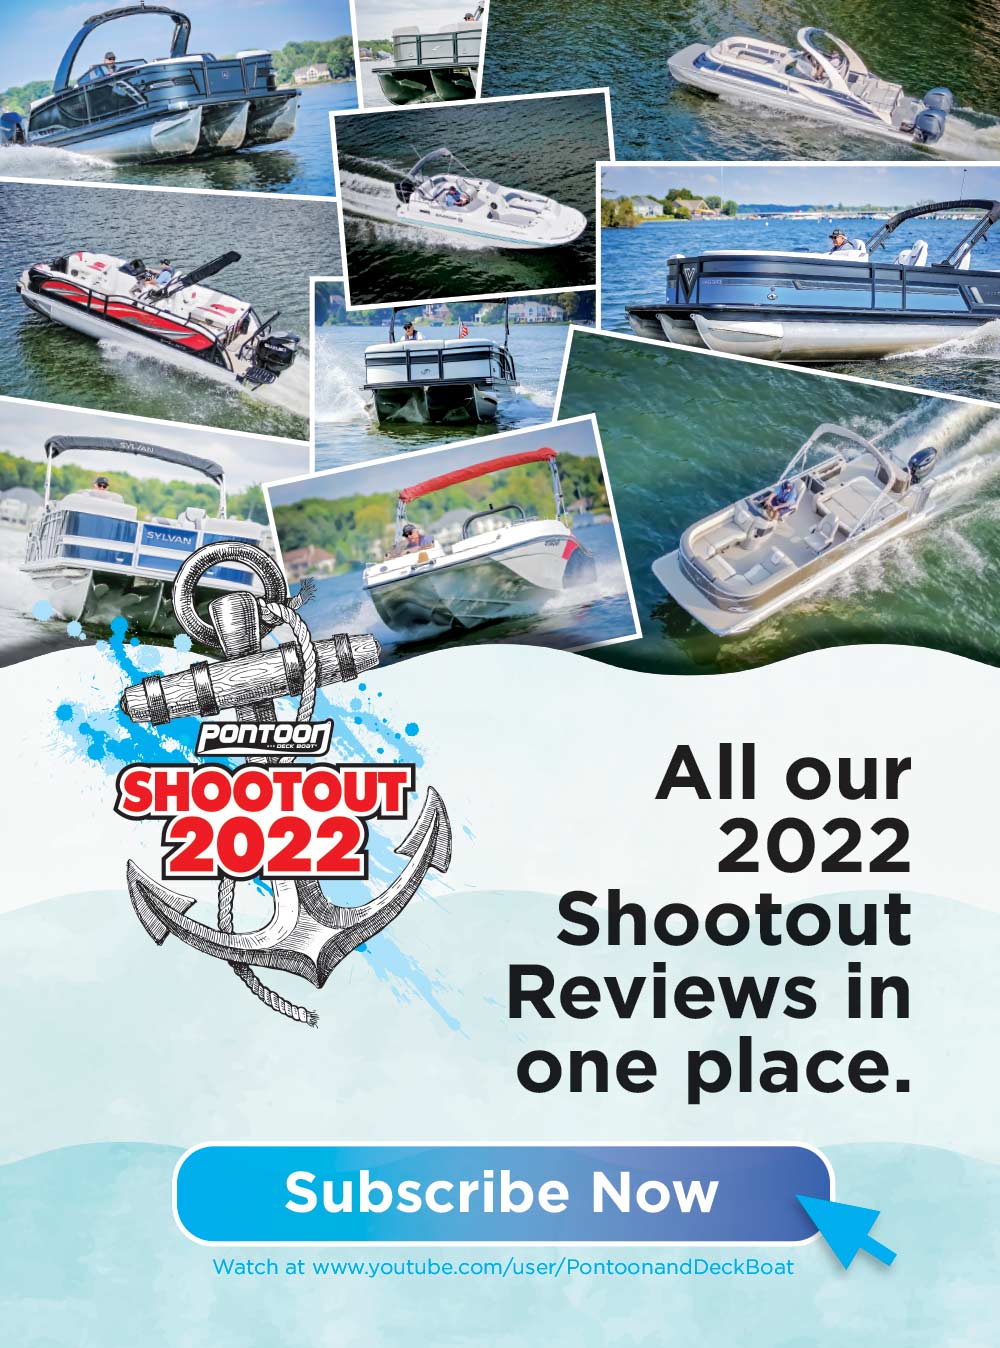 Pontoon and Deck Boat Shootout 2022 Advertisement